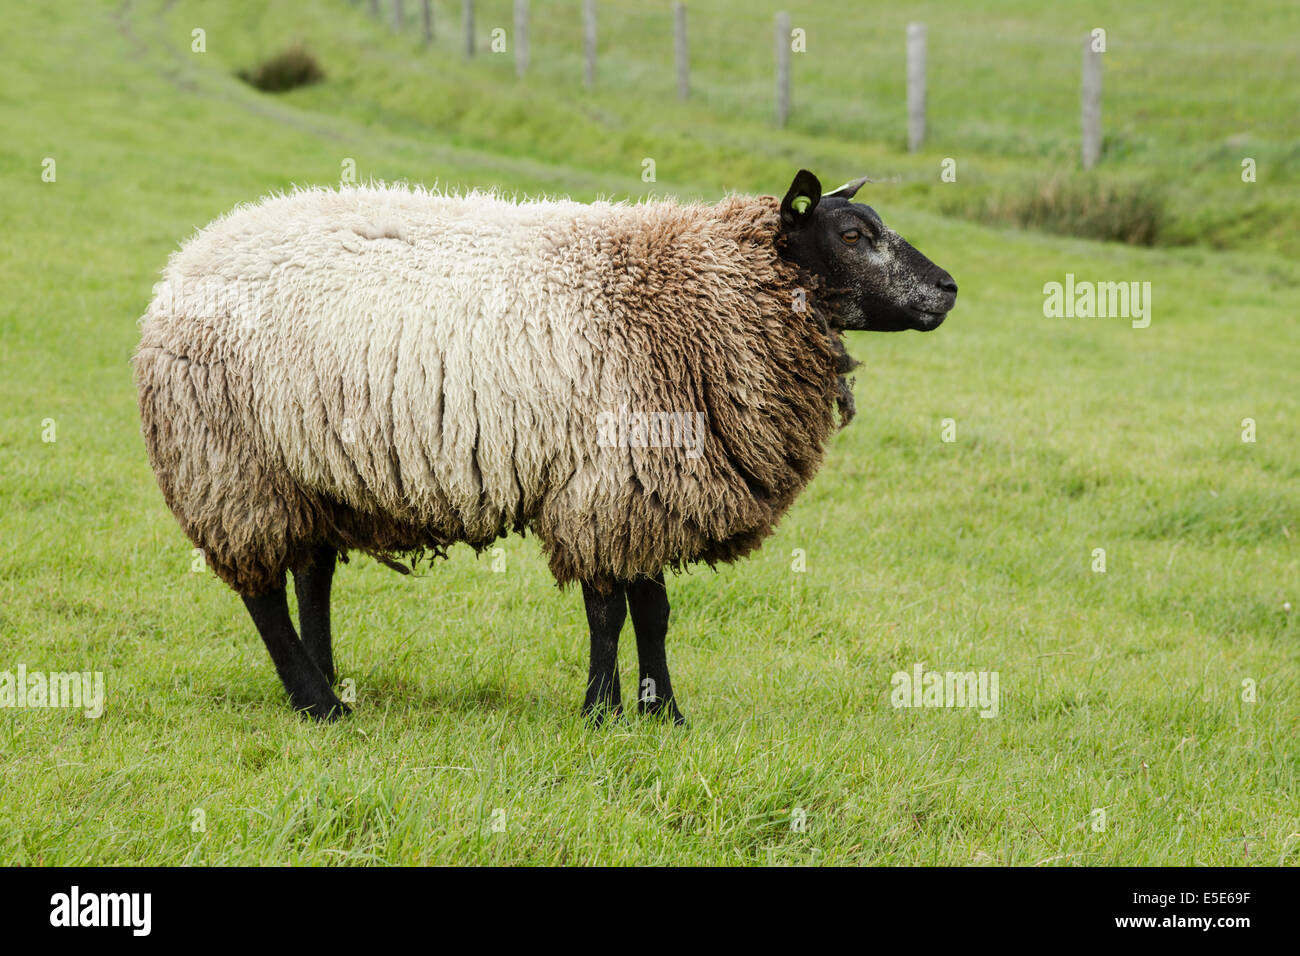 Blue Texel sheep, Latin name Stamboek Blauwe Texelaar, standing in a grassy field, May Stock Photo